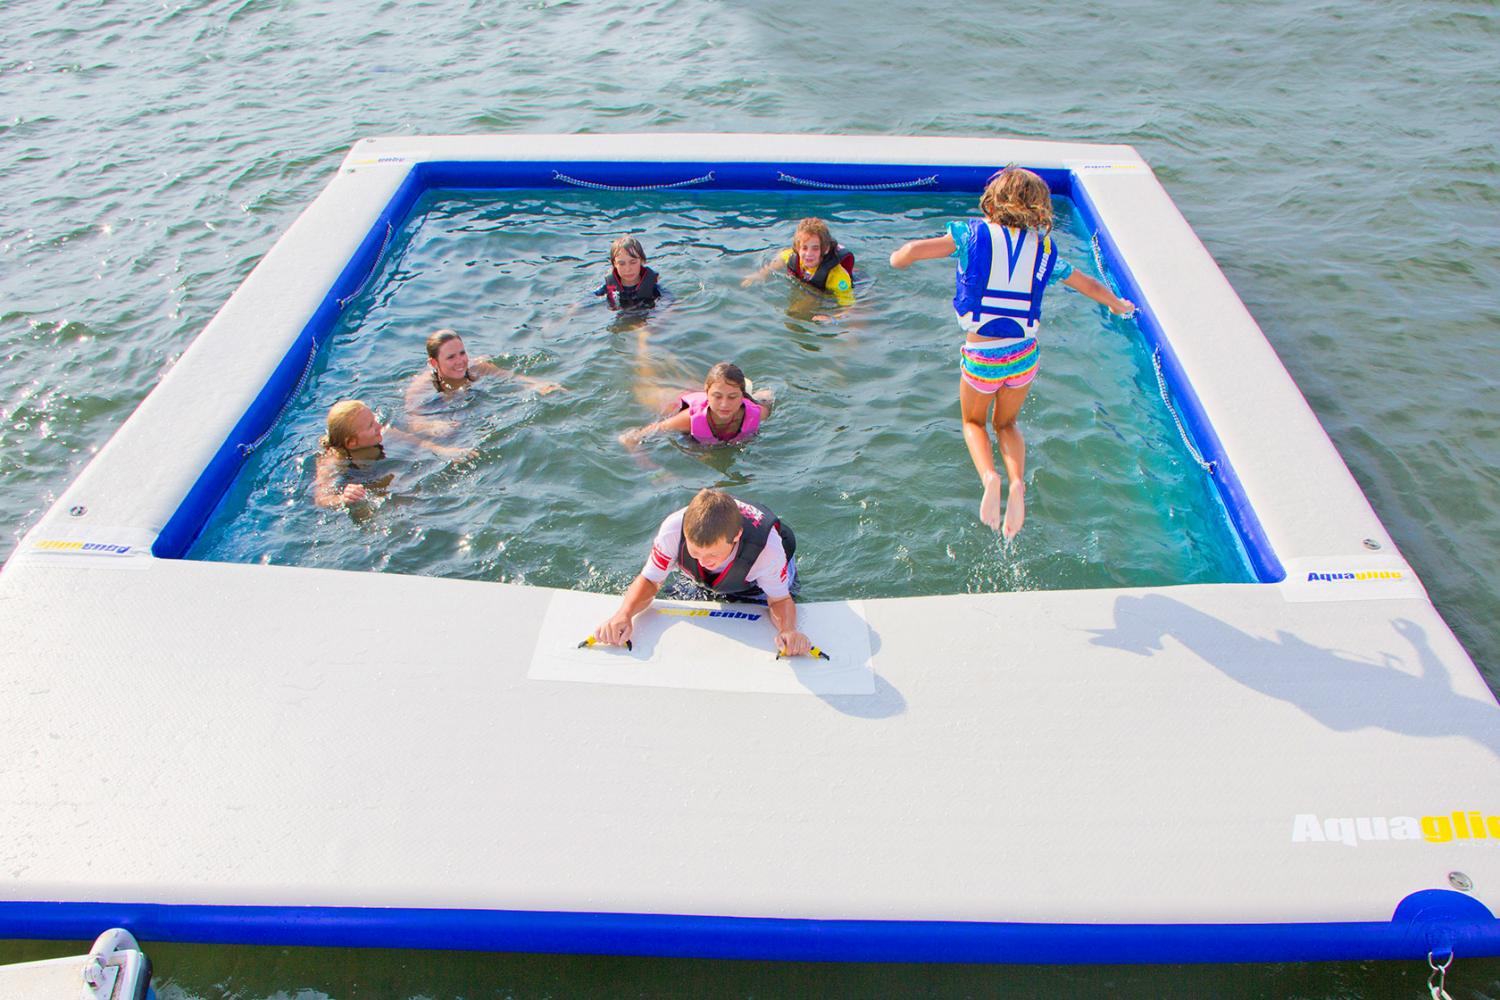 Aguaglide Ocean Pool - Inflatable sea pool gives closed mesh swimming pool in lake or ocean